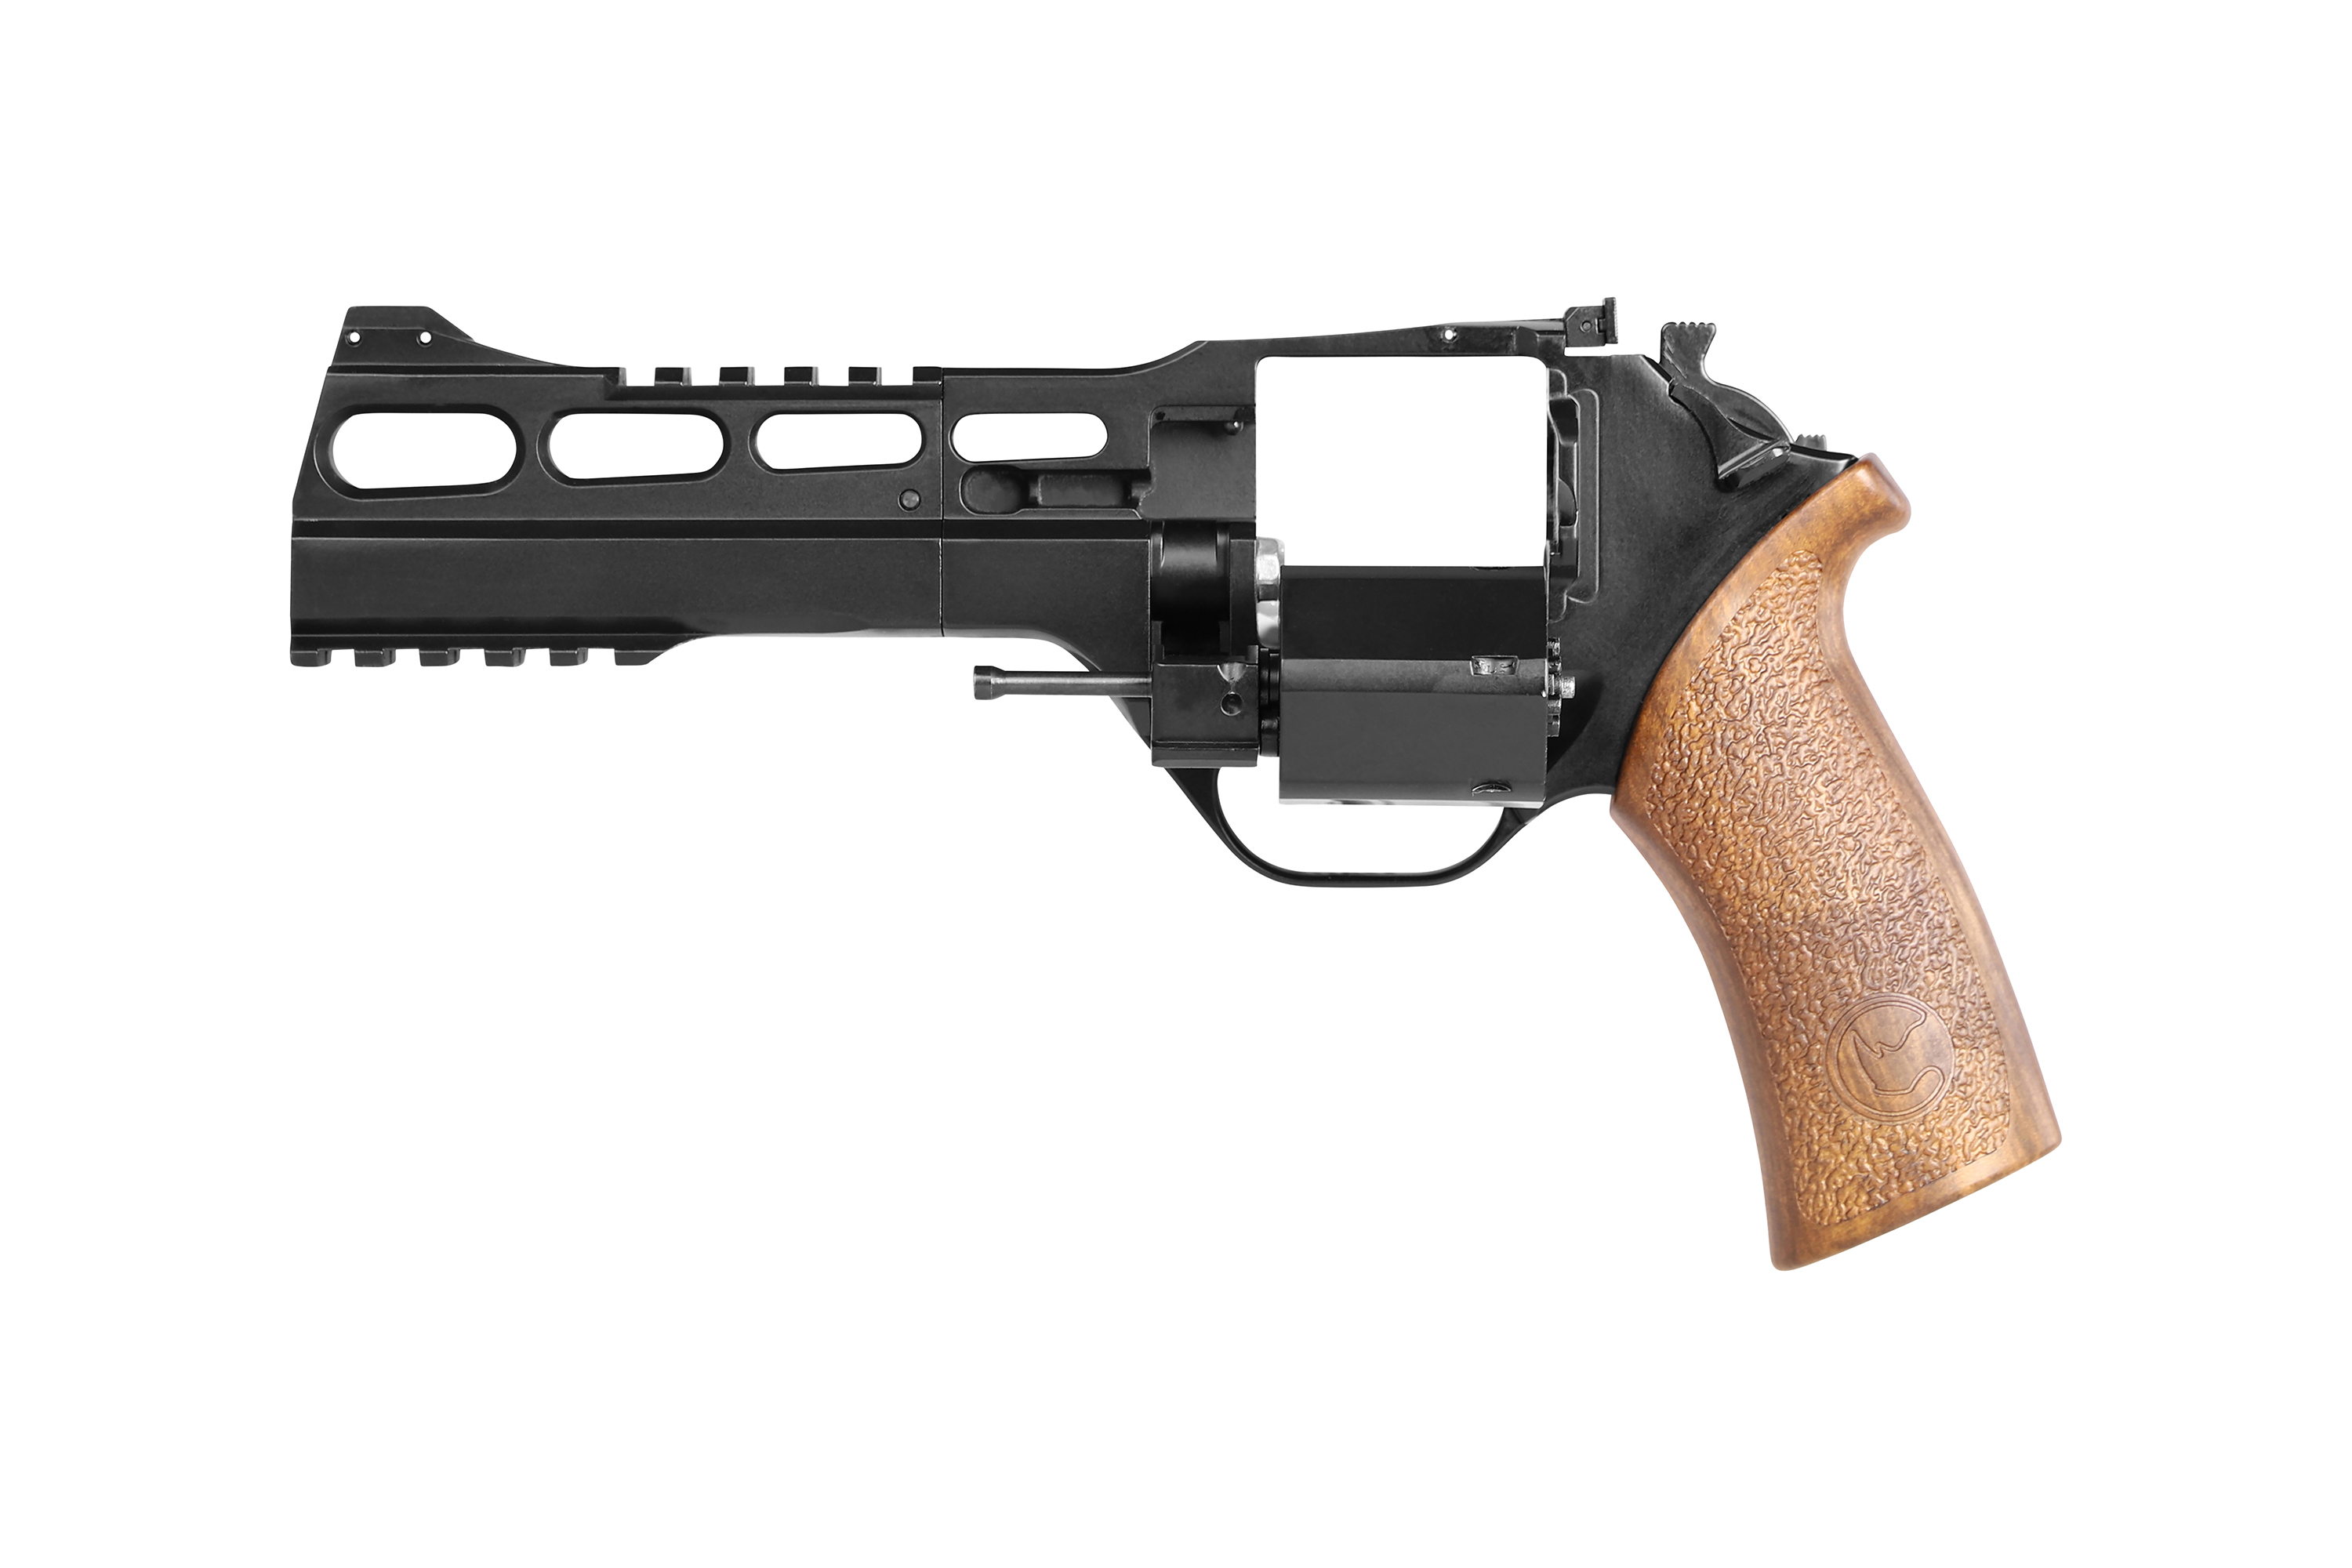 Chiappa Rhino Revolver 60DS Schwarz 6mm - Airsoft Co2 Non BlowBack